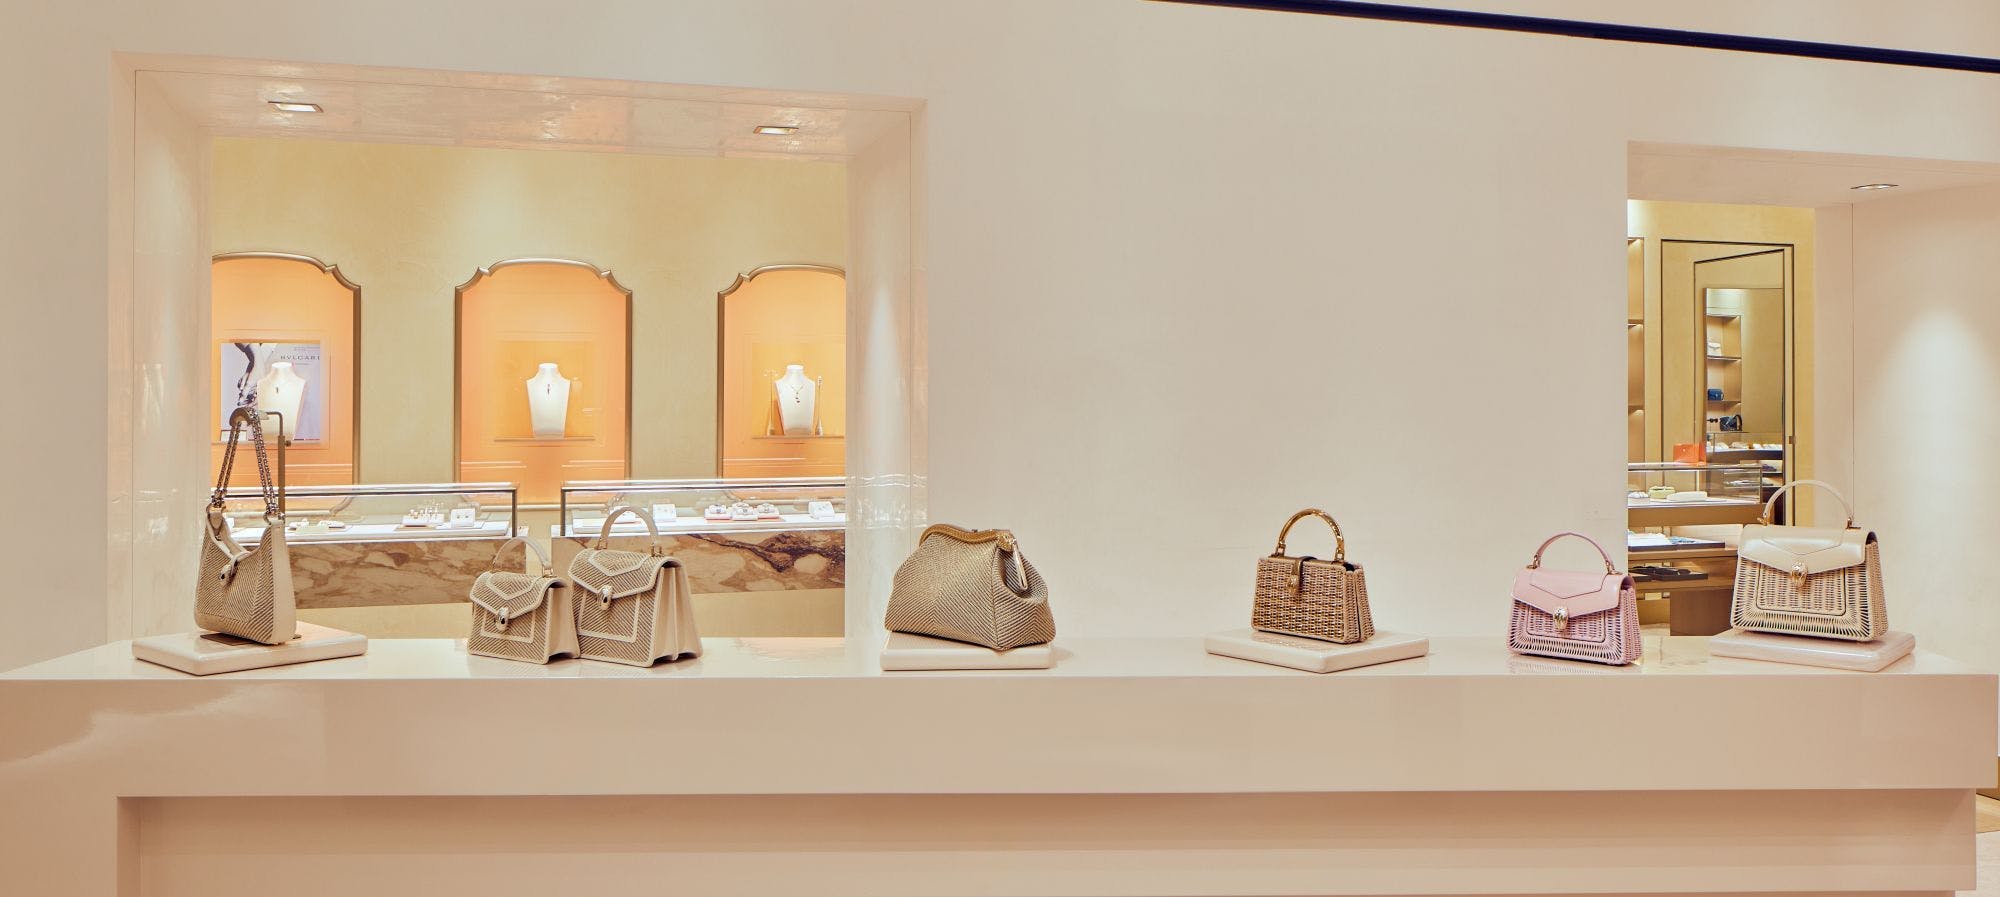 accessories bag handbag purse dressing room indoors room